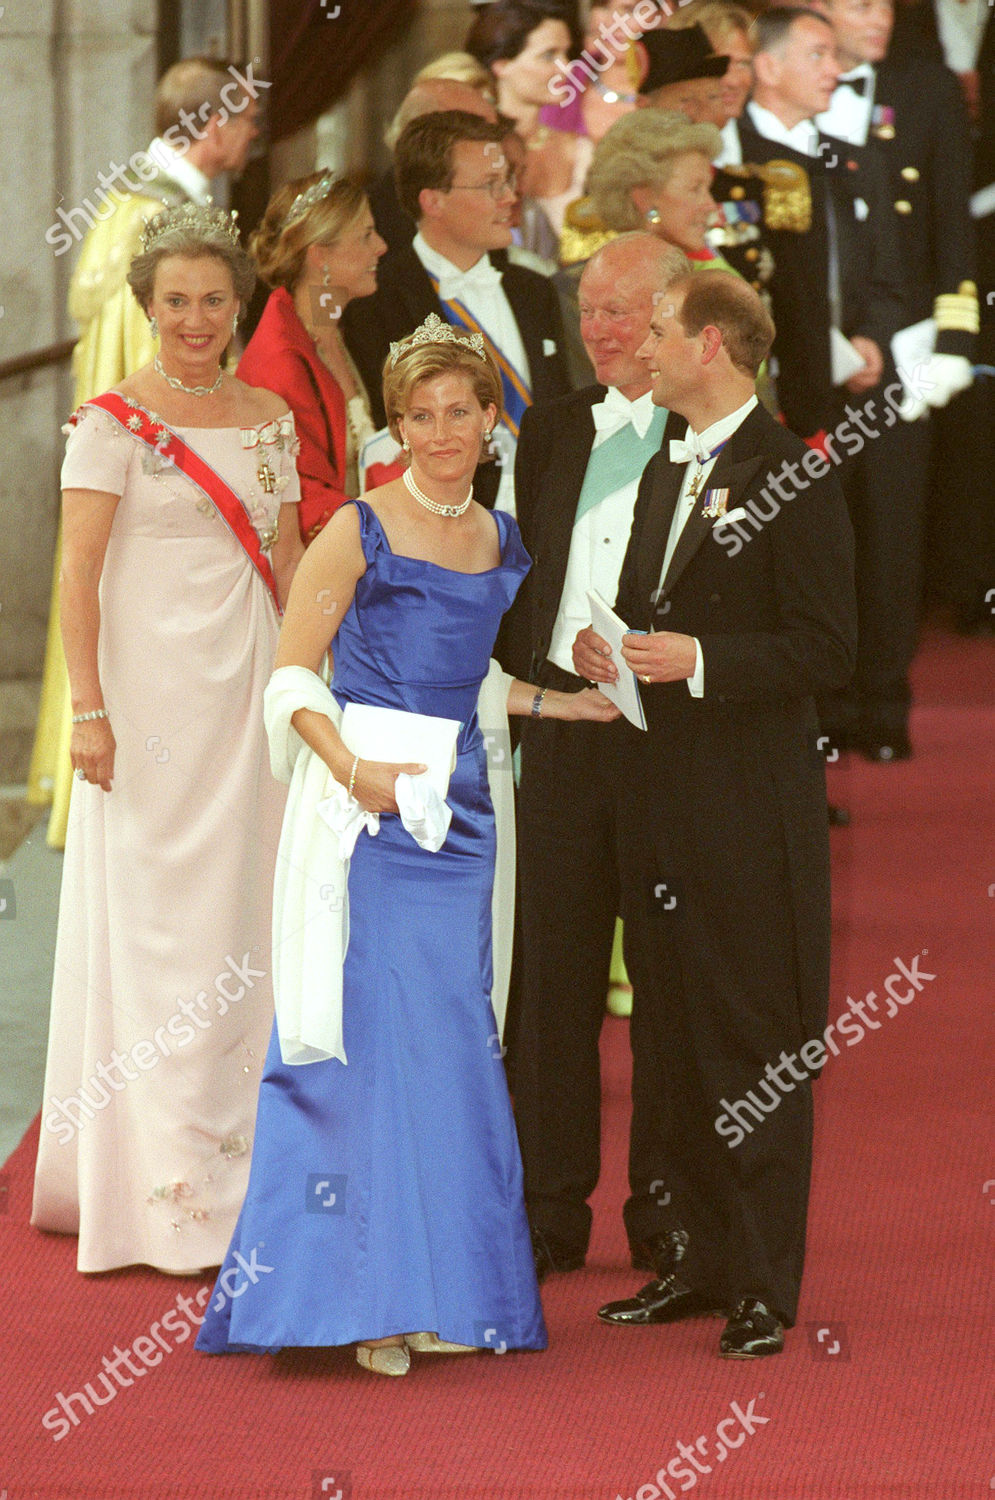 the-royal-wedding-of-crown-prince-haakon-magnus-and-mette-marit-tjessen-hoiby-in-oslo-norway-shutterstock-editorial-341606ay.jpg